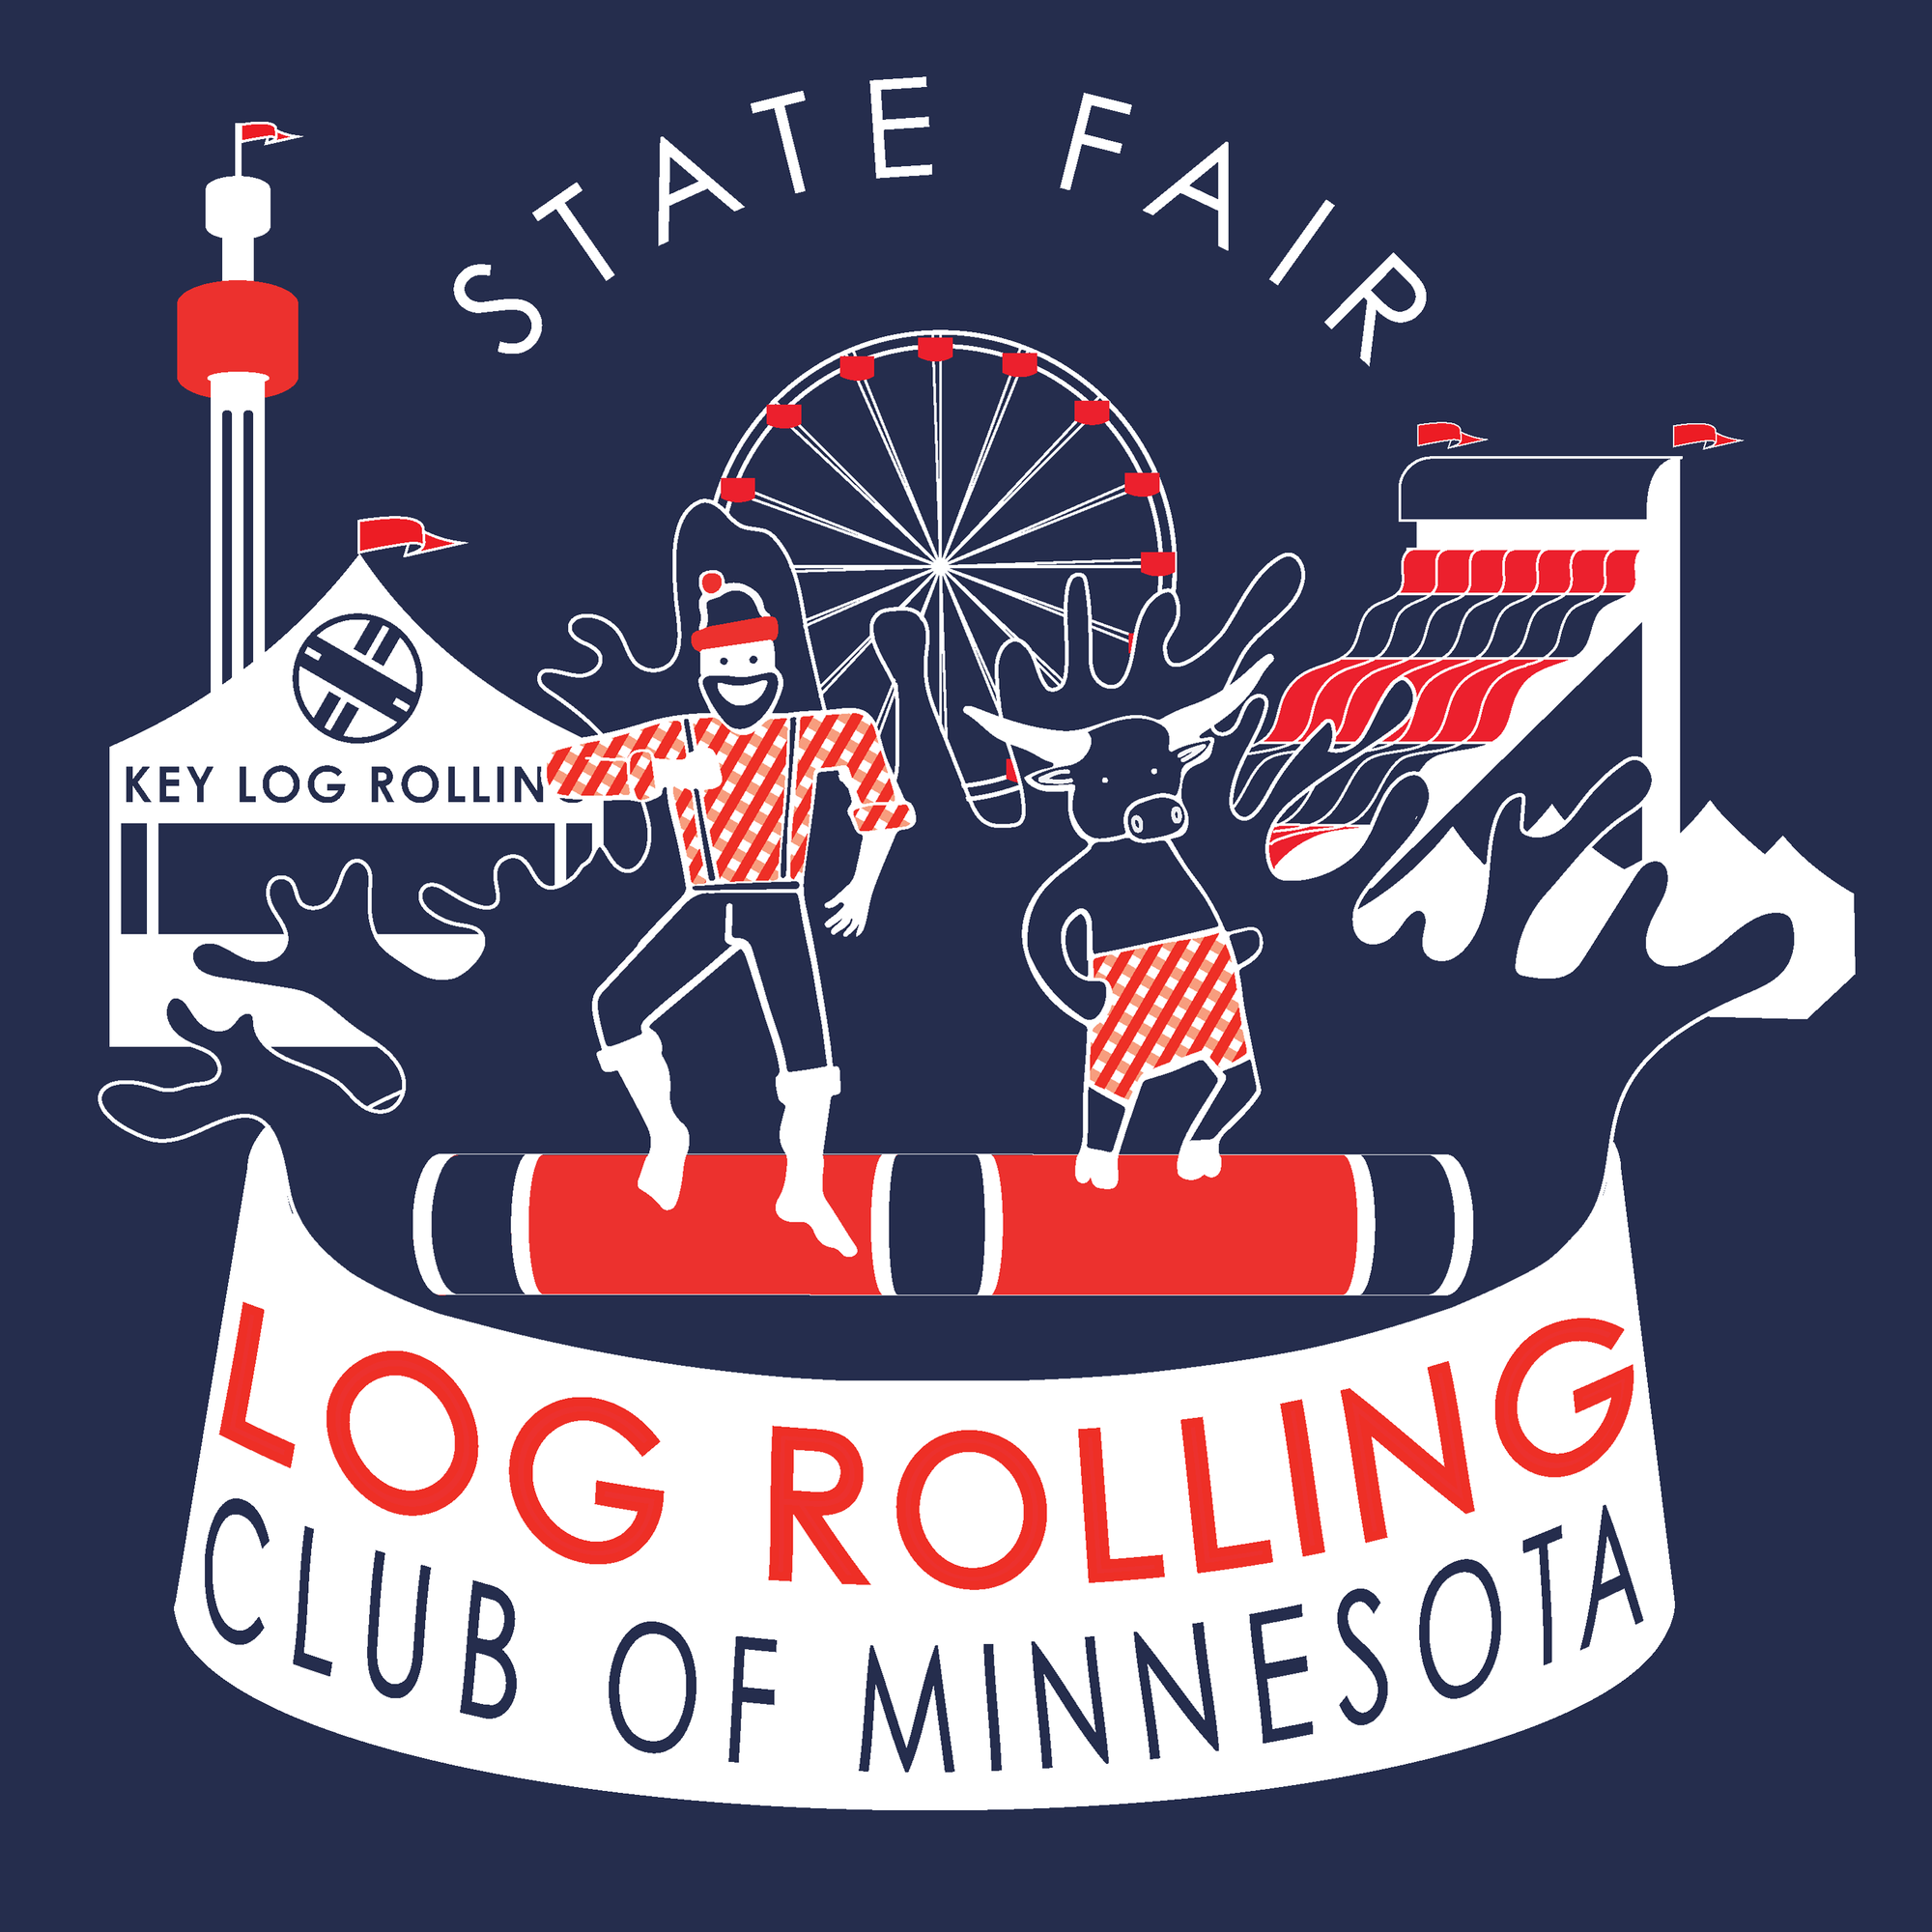 MN State Fair Log Rolling Club - Key Log Rolling